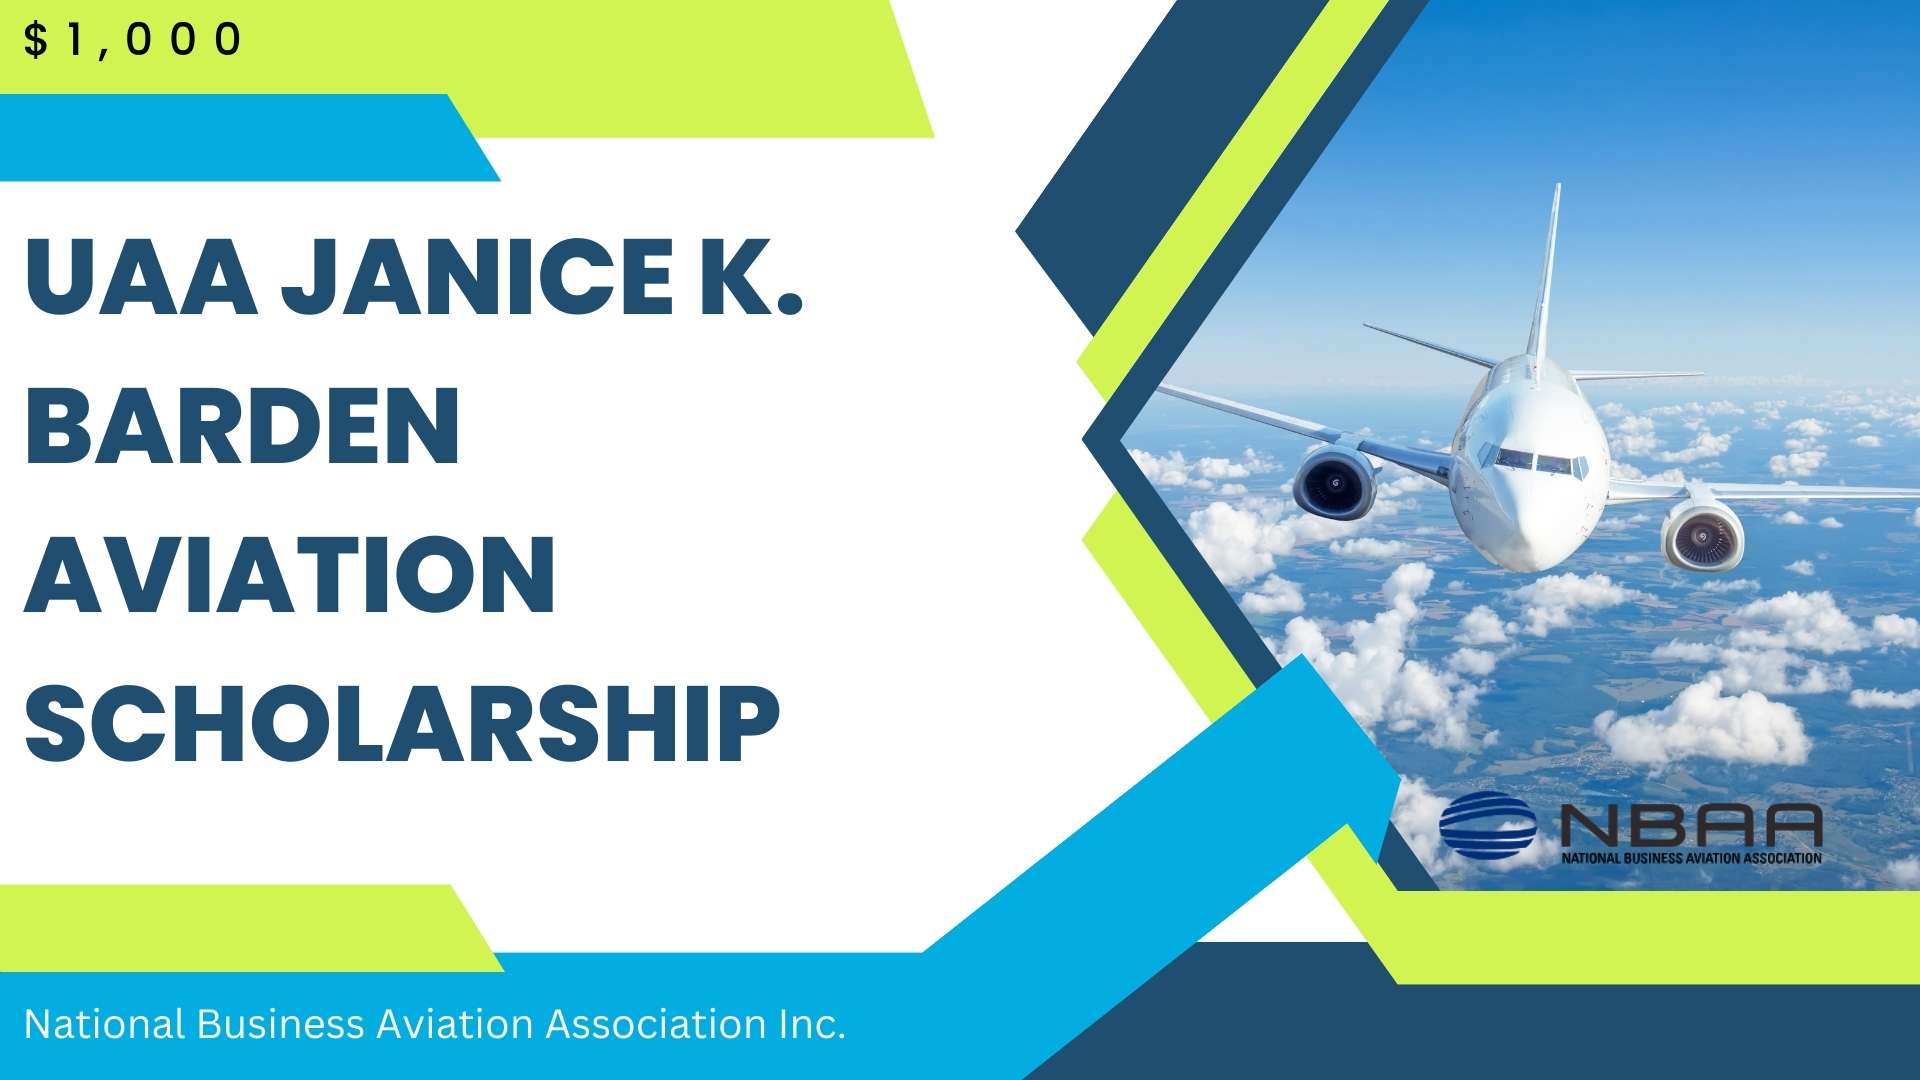 UAA Janice K. Barden Aviation Scholarship